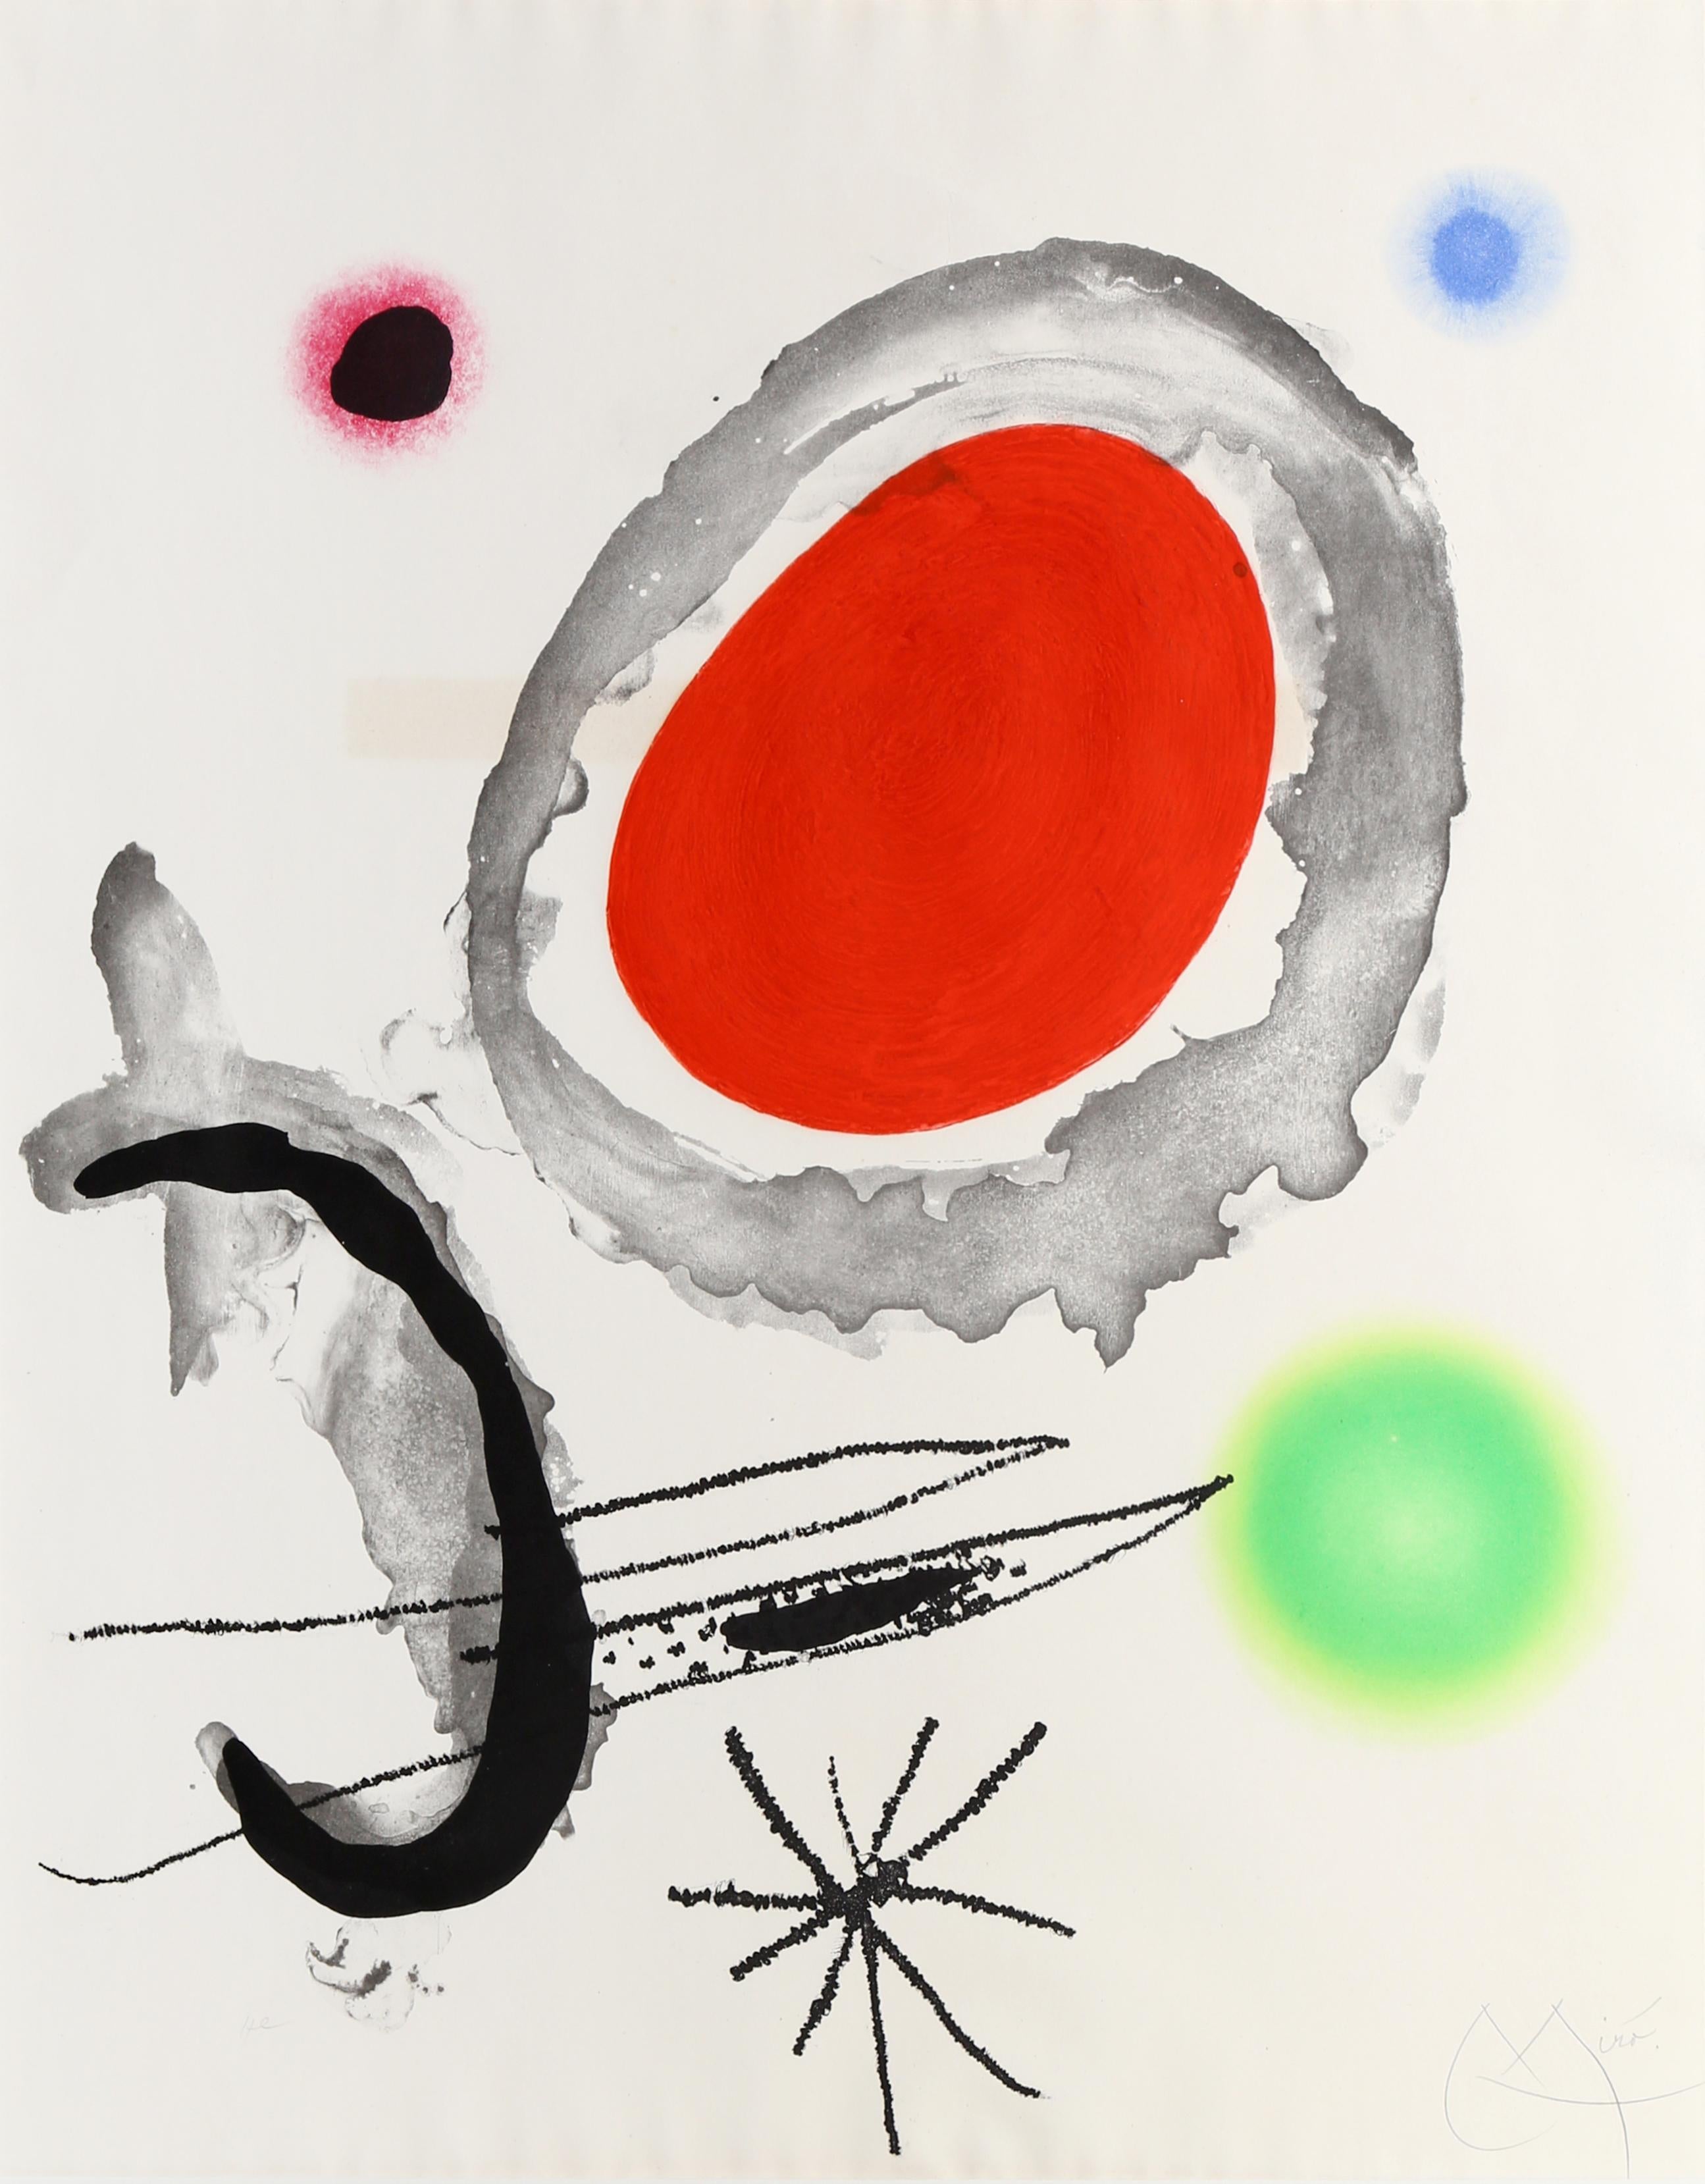 Oiseau Entre deux Astres, Framed Etching by Joan Miro 1967 - Modern Print by Joan Miró